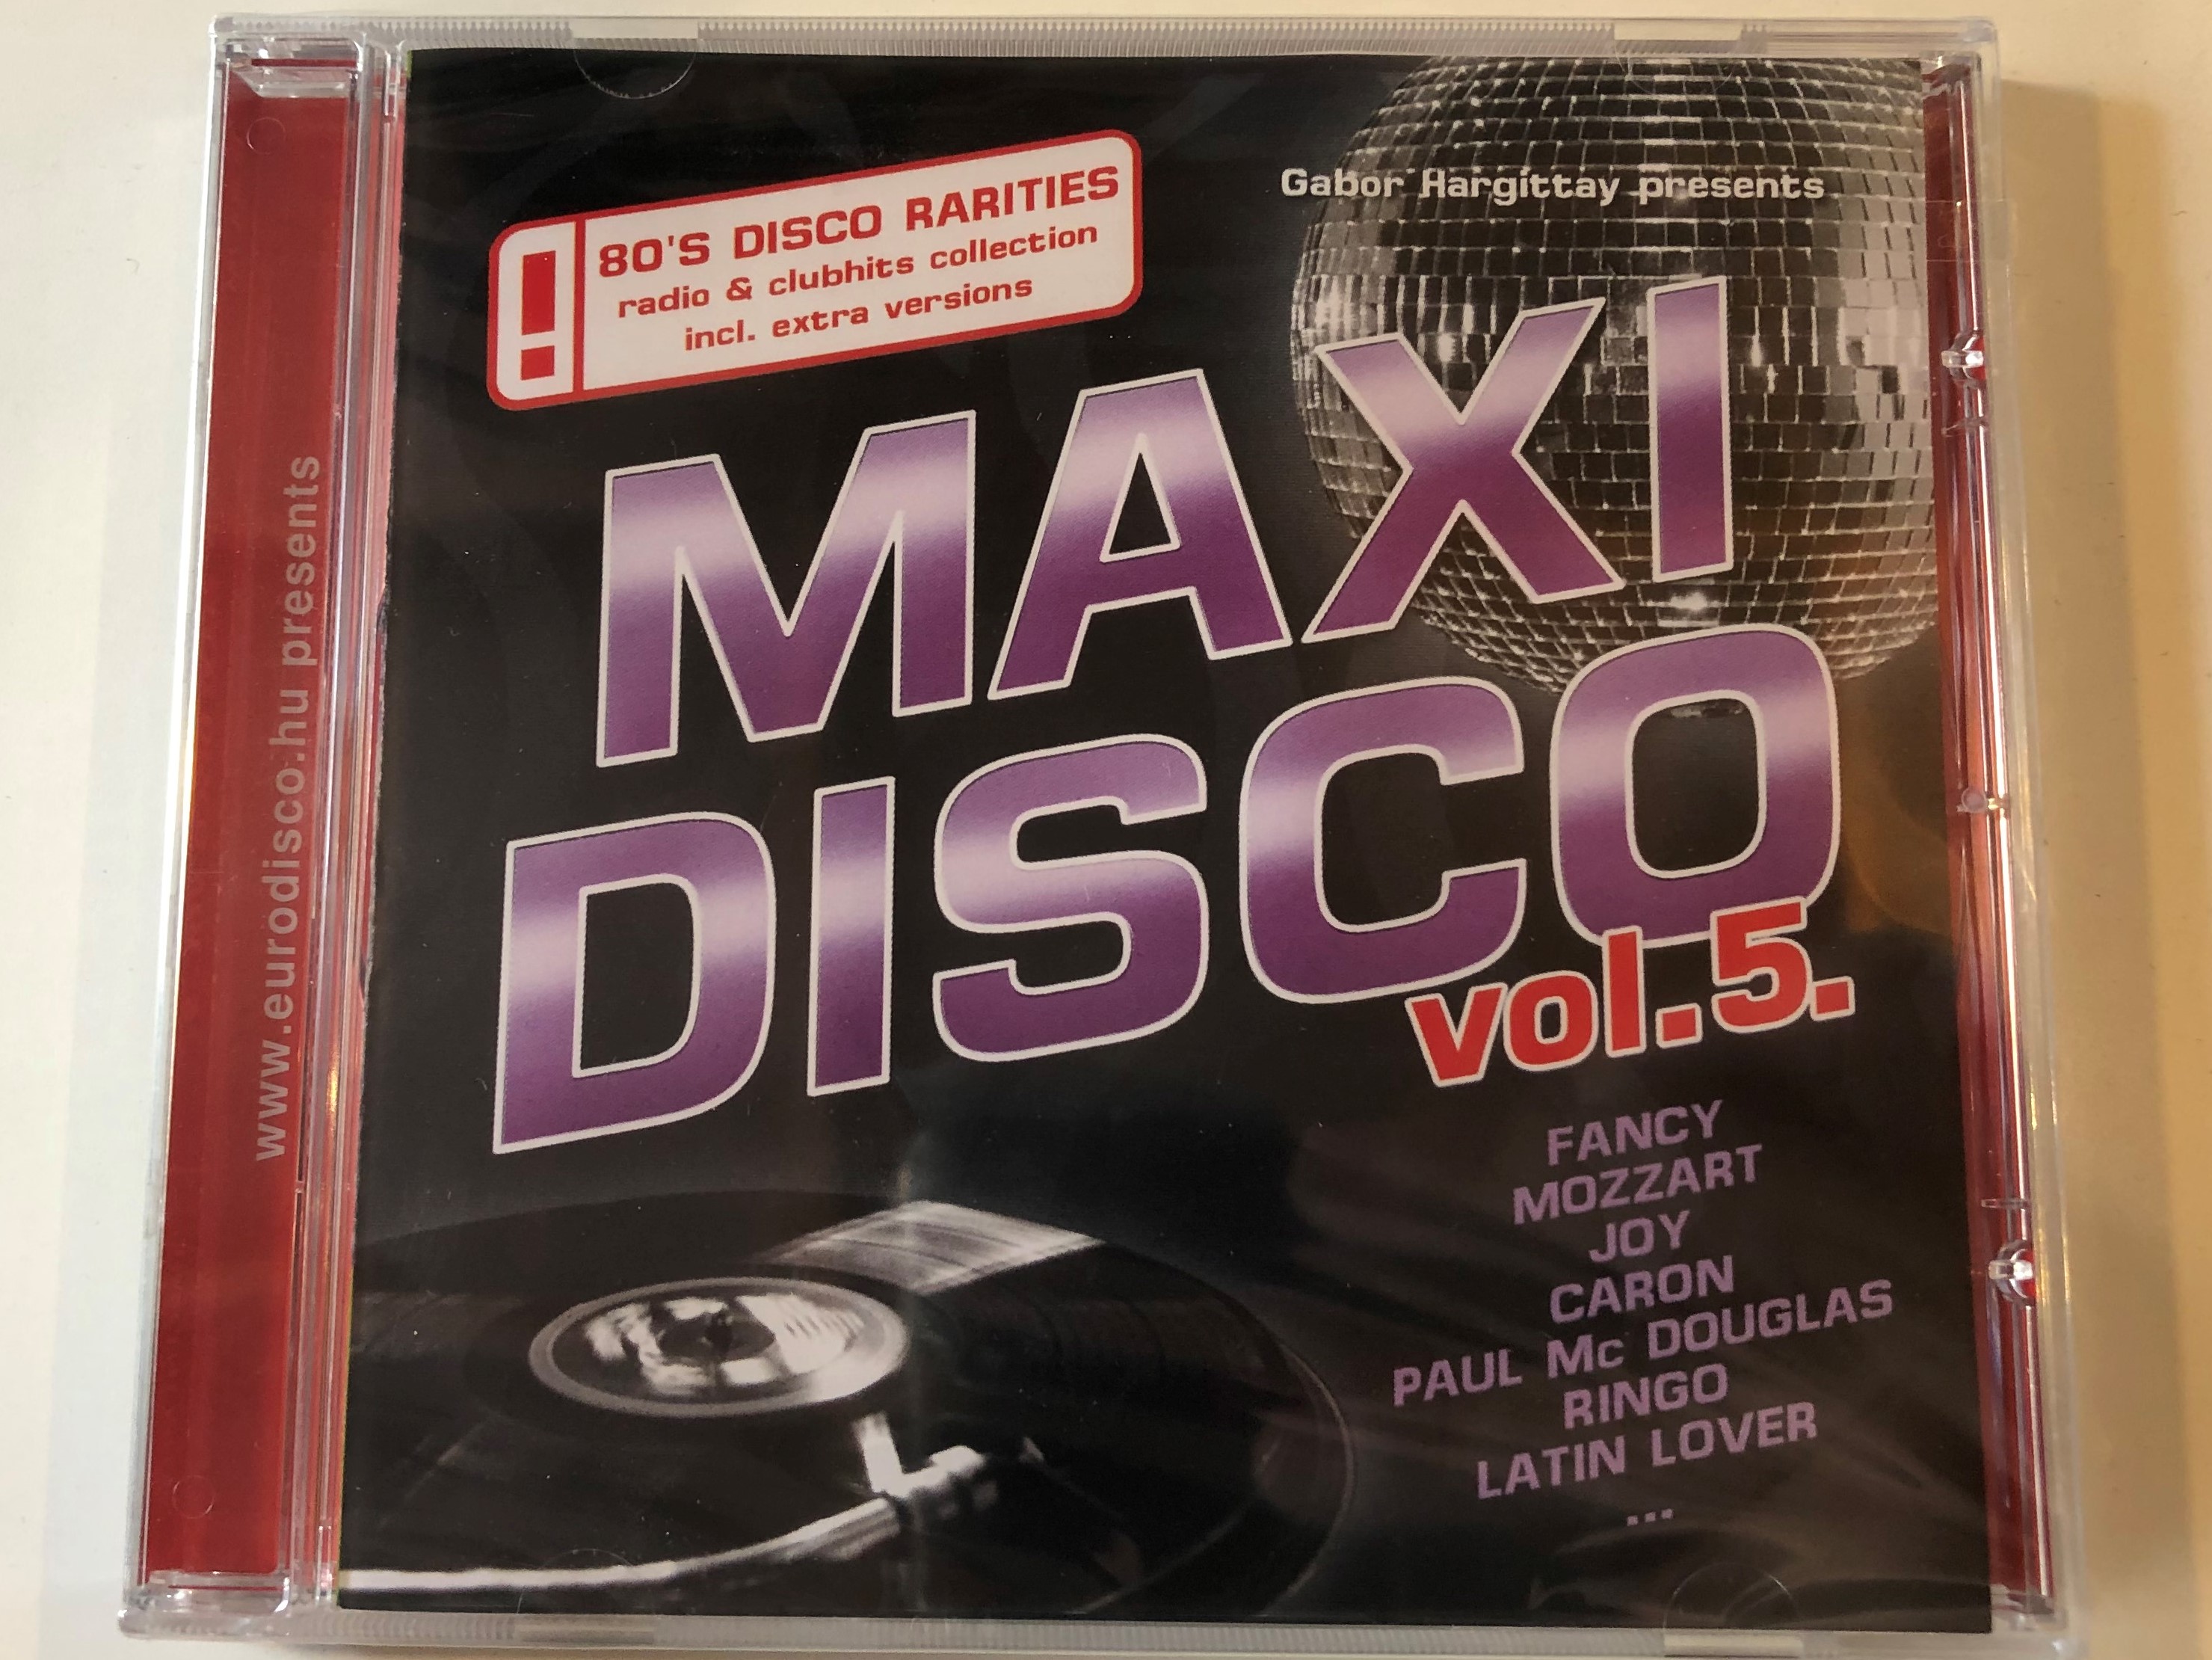 gabor-hargittay-presents-maxi-disco-vol.-5.-fancy-mozzart-joy-caron-paul-mc-douglas-ringo-latin-lover...-80-s-disco-rarities-radio-clubhits-collection-incl.-extra-versions-hargent-medi-1-.jpg